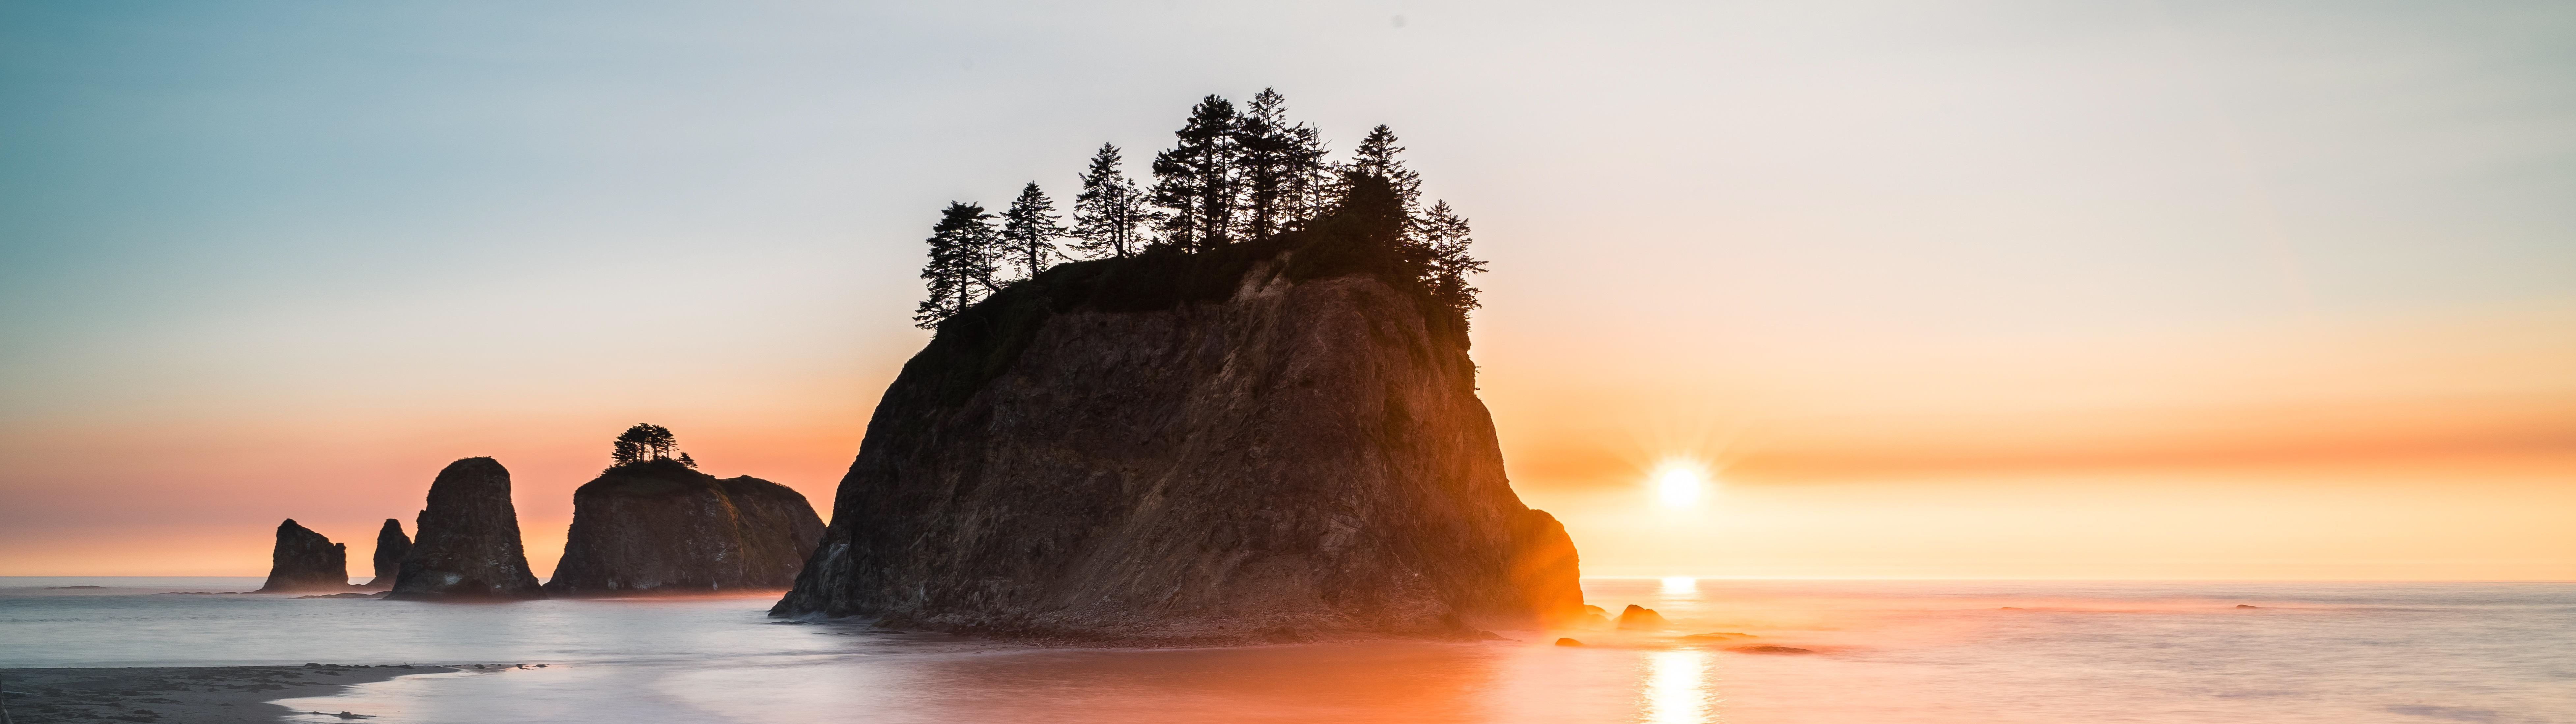 Oregon Coast Sunset, 32x9 Dual Monitor Wallpaper Crop